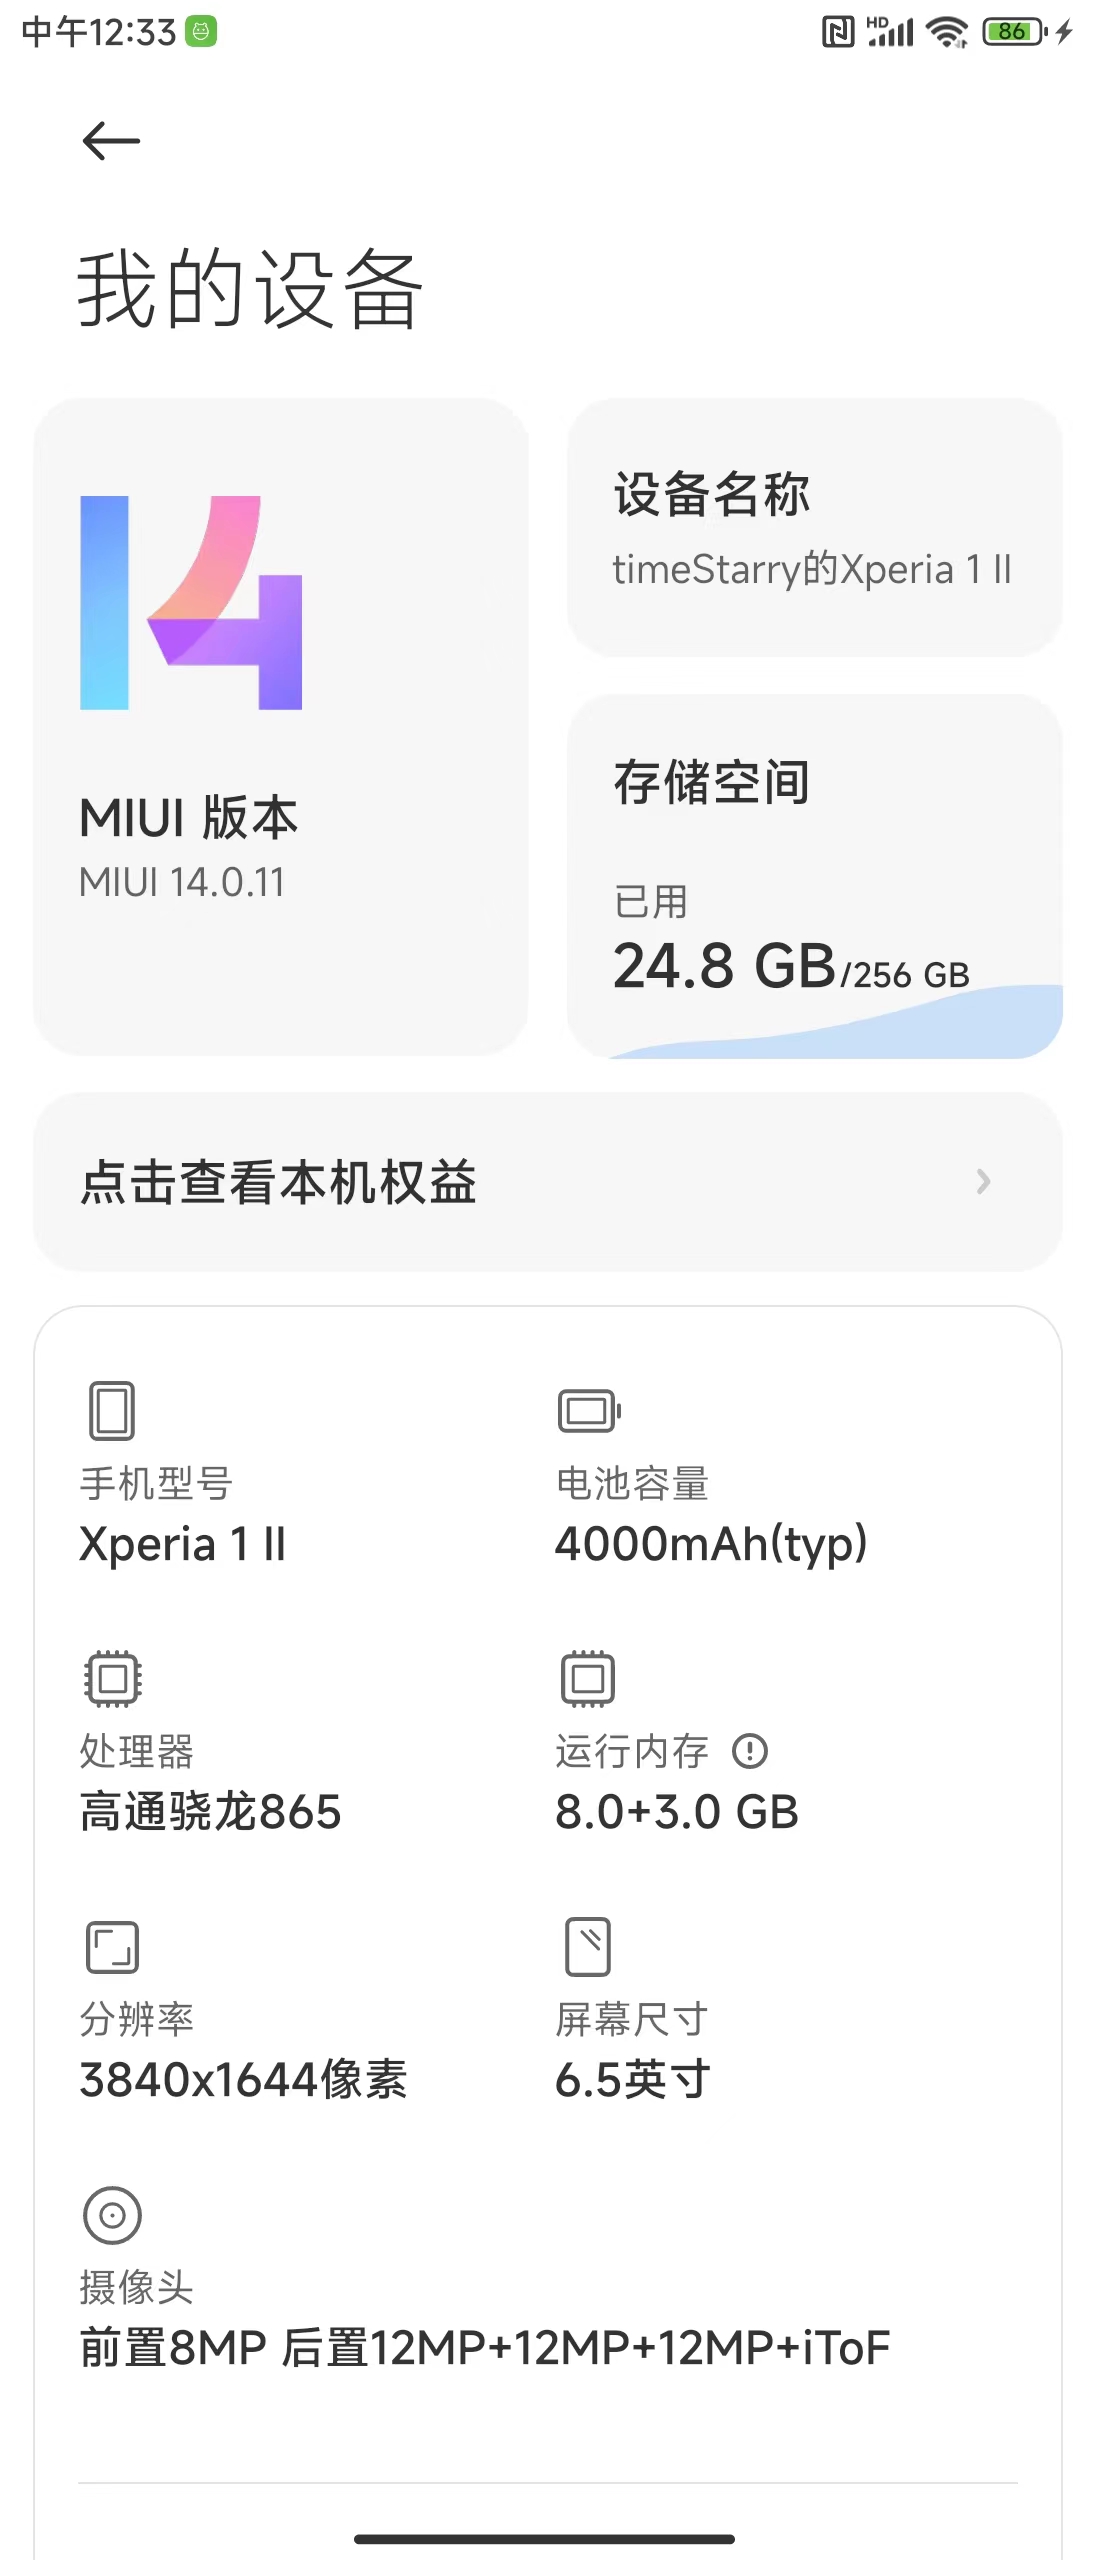 【折腾】Xperia 1 II 刷入MIUI 14体验